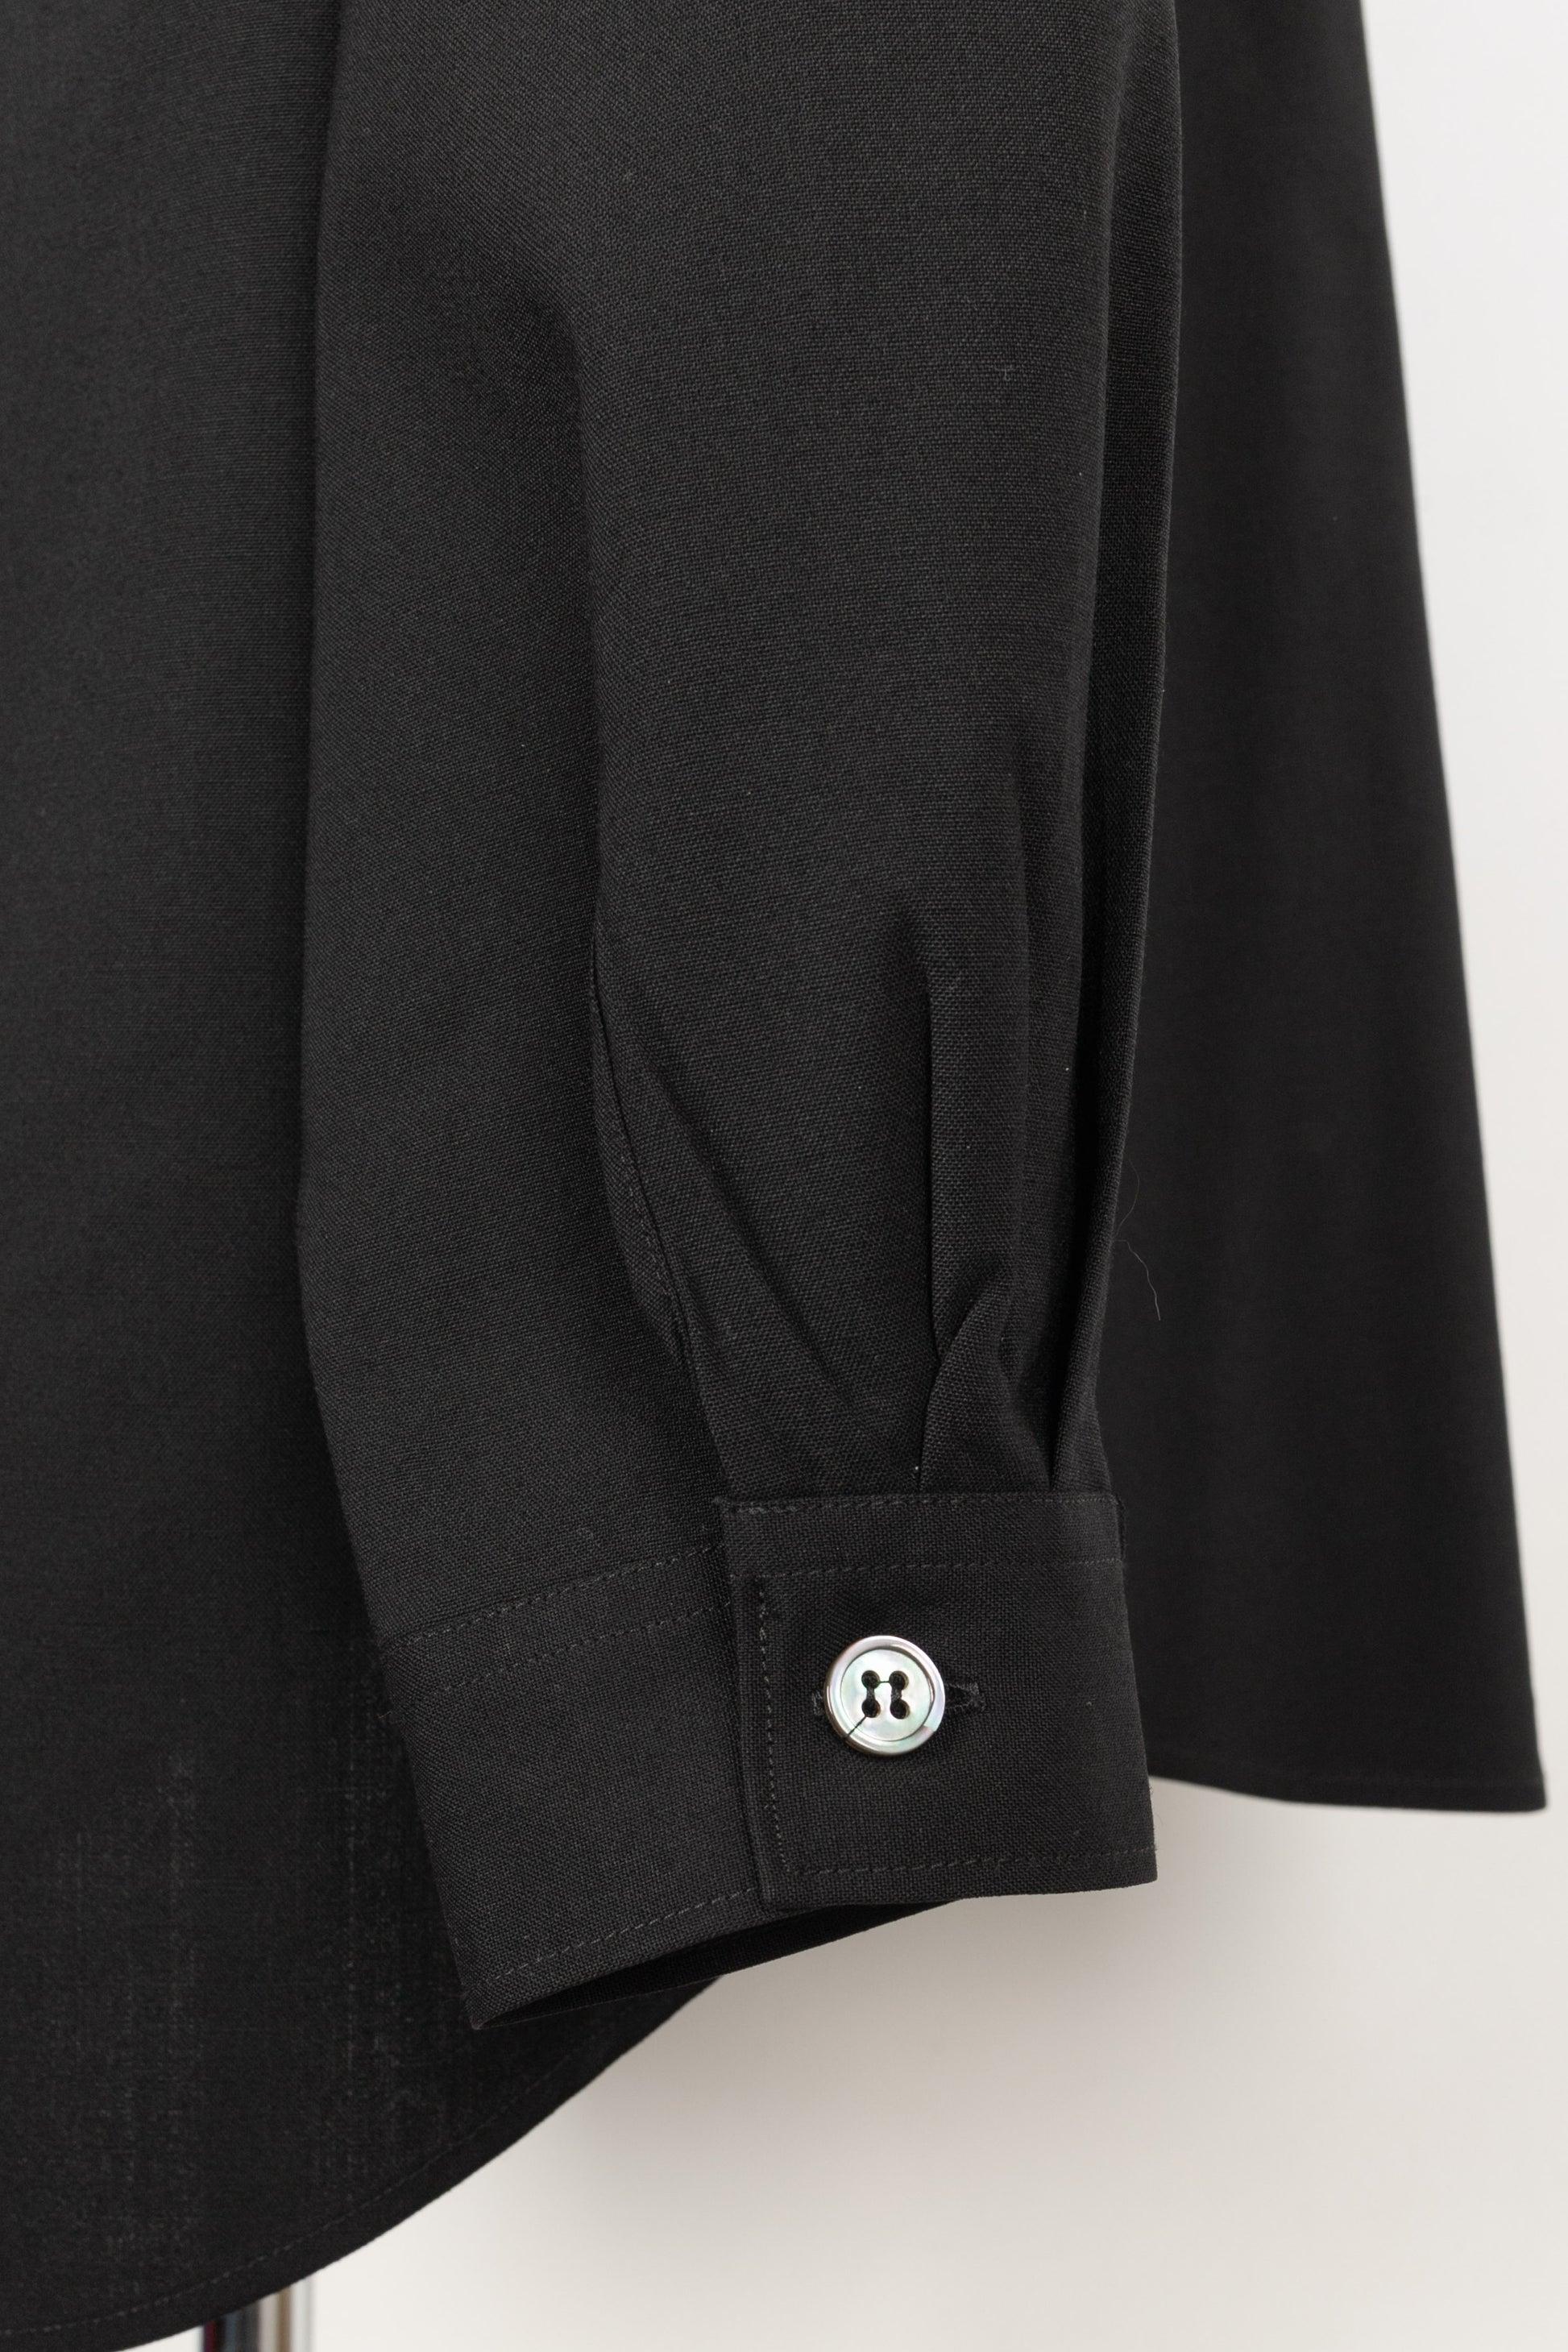 Yamamoto Schwarzes Hemd aus Wolle im Angebot 2